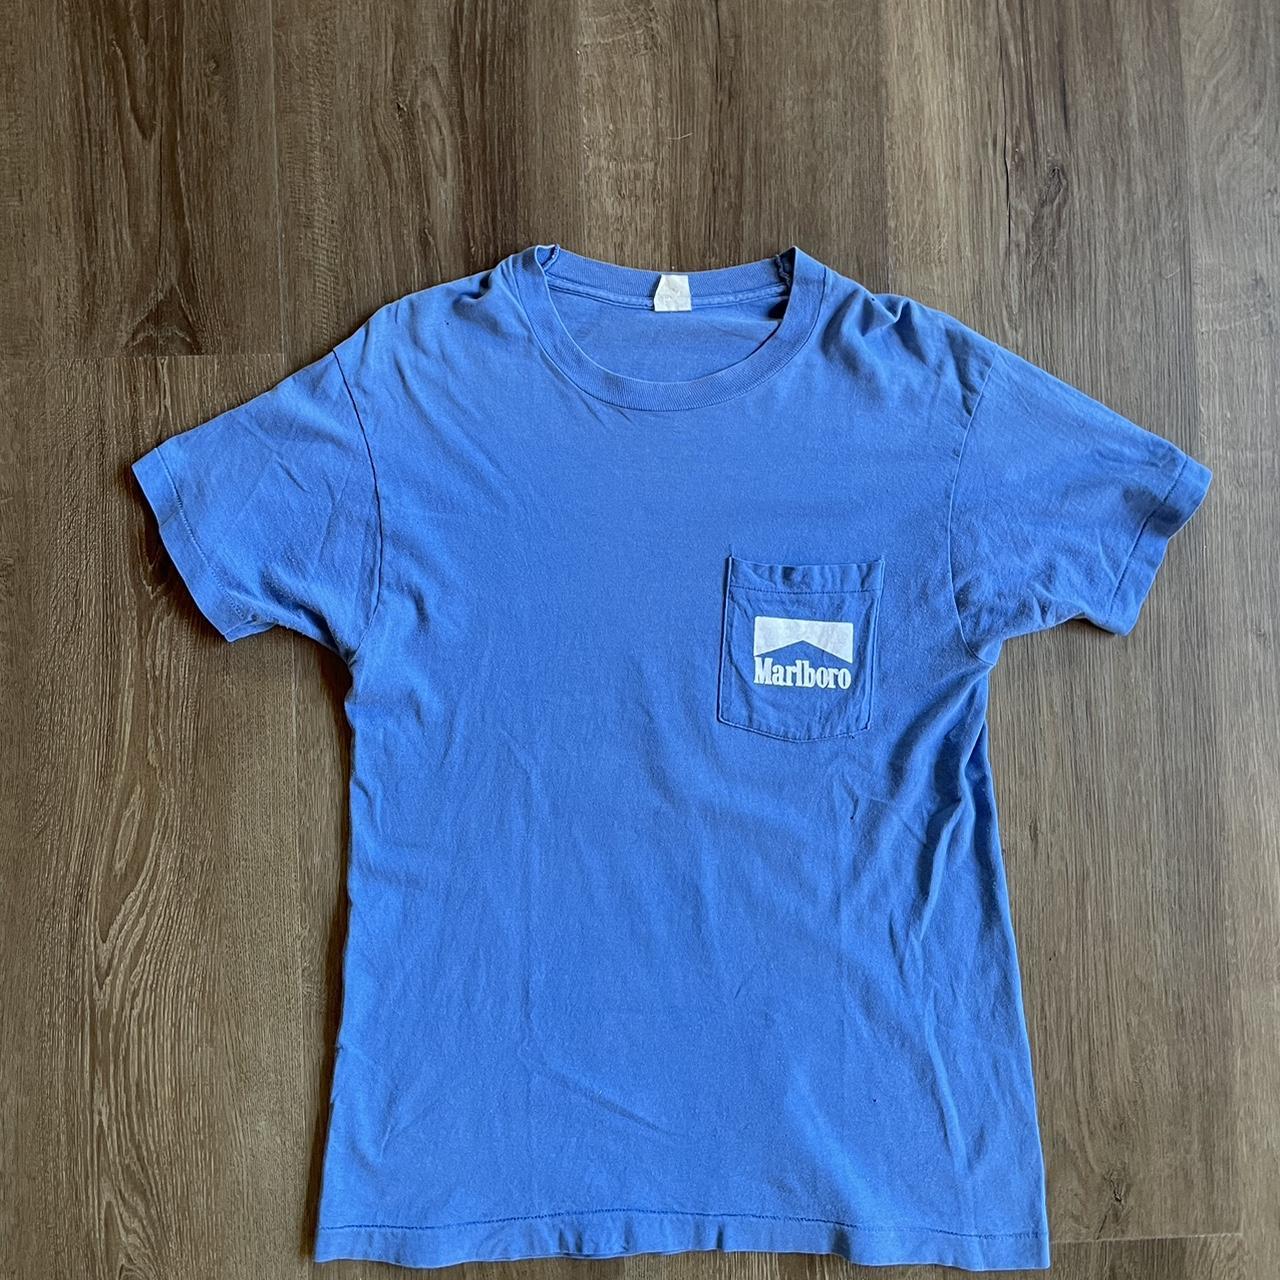 Marlboro Men's Blue T-shirt | Depop